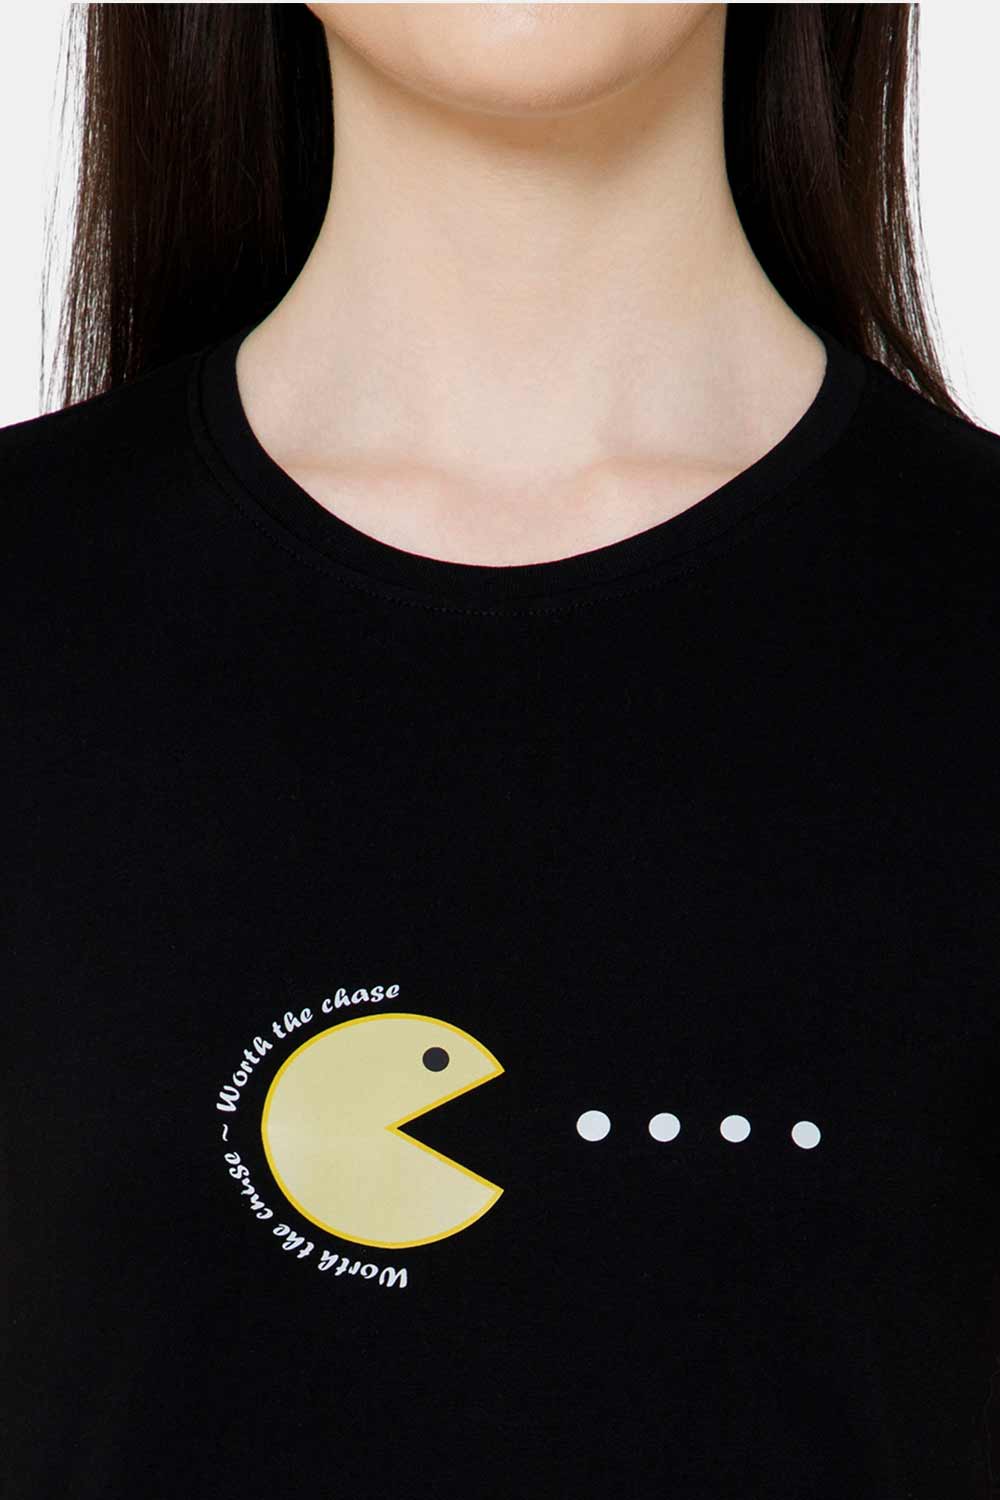 Jusperf Women's Printed Crew Neck Casual T-Shirt - Black - TS36